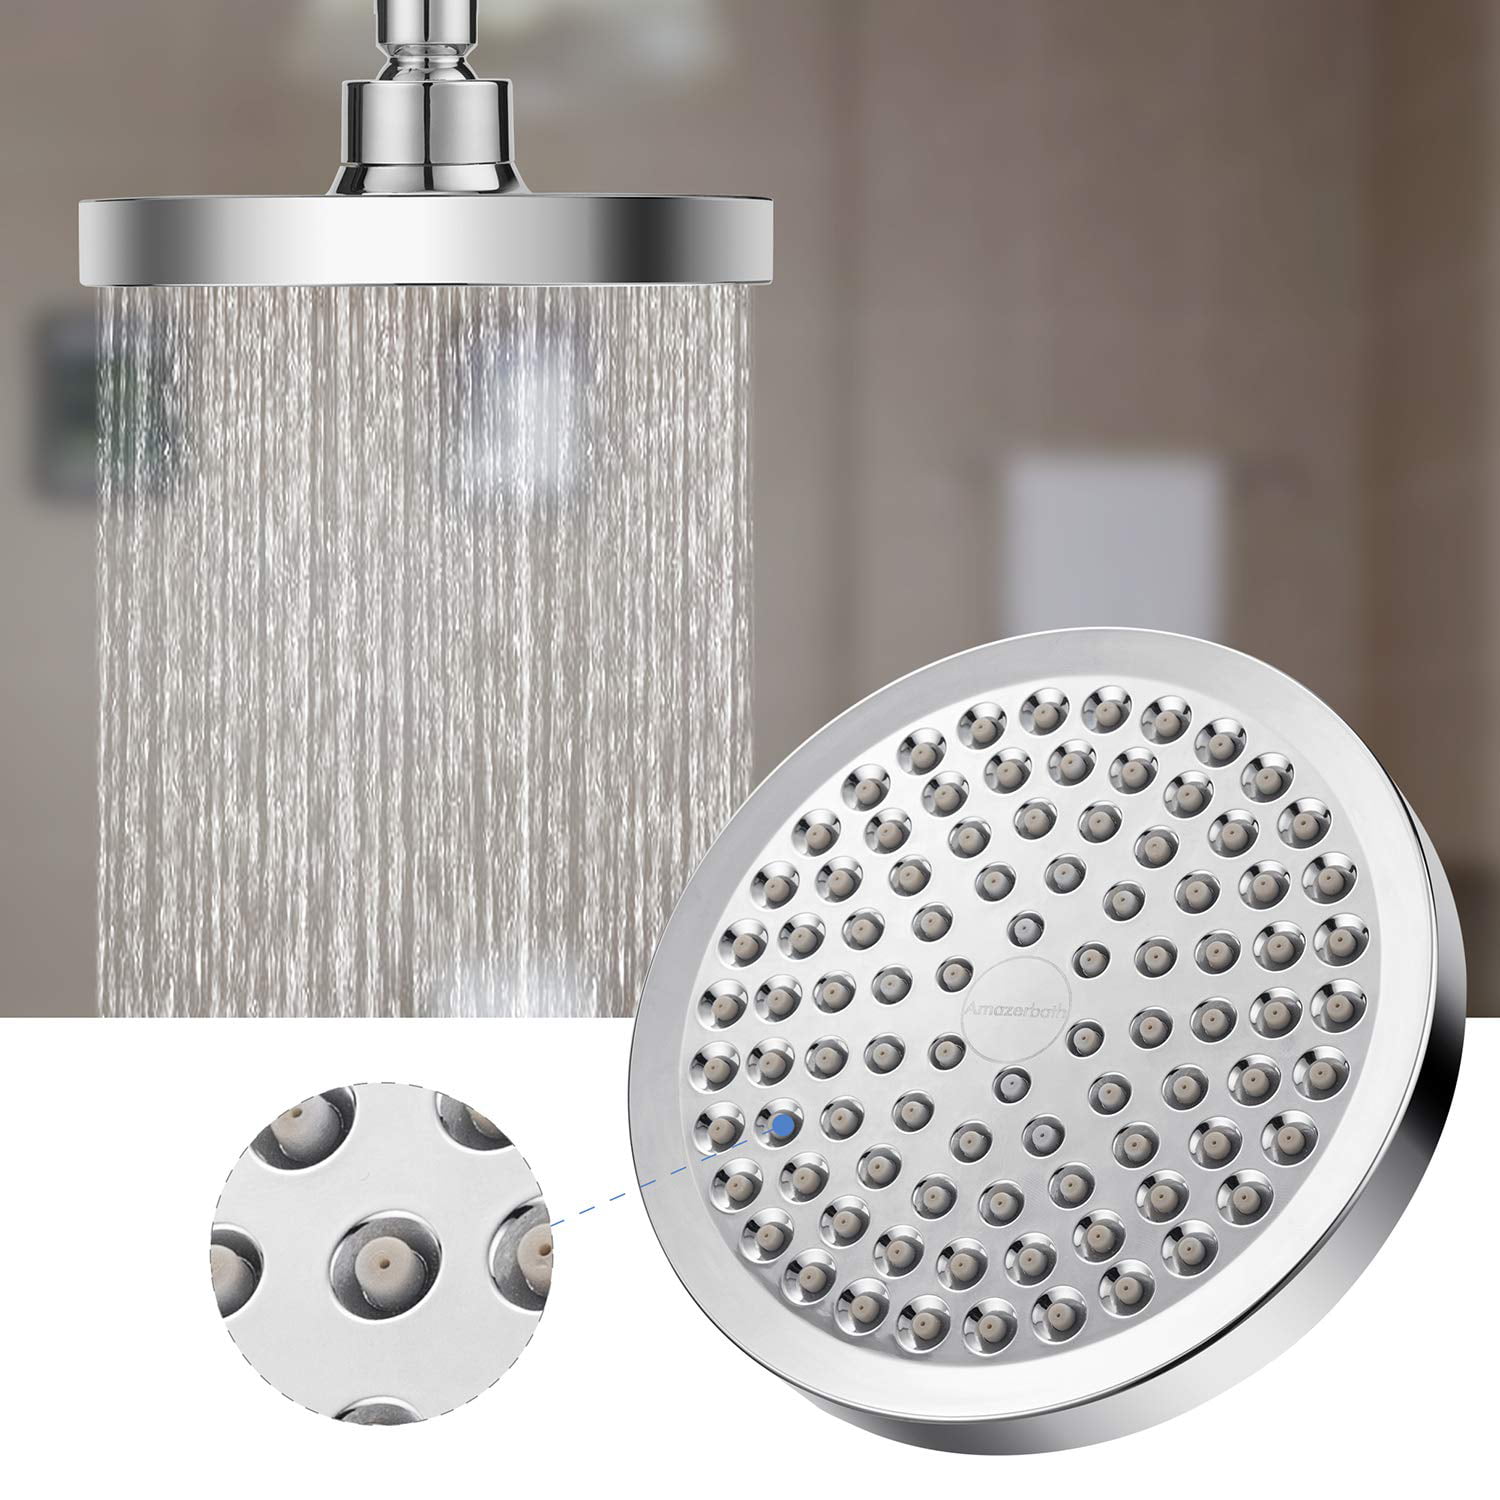 Fix Anti-clog Anti-leak Rain With Luxury AmazerBath High Pressure Shower Head 